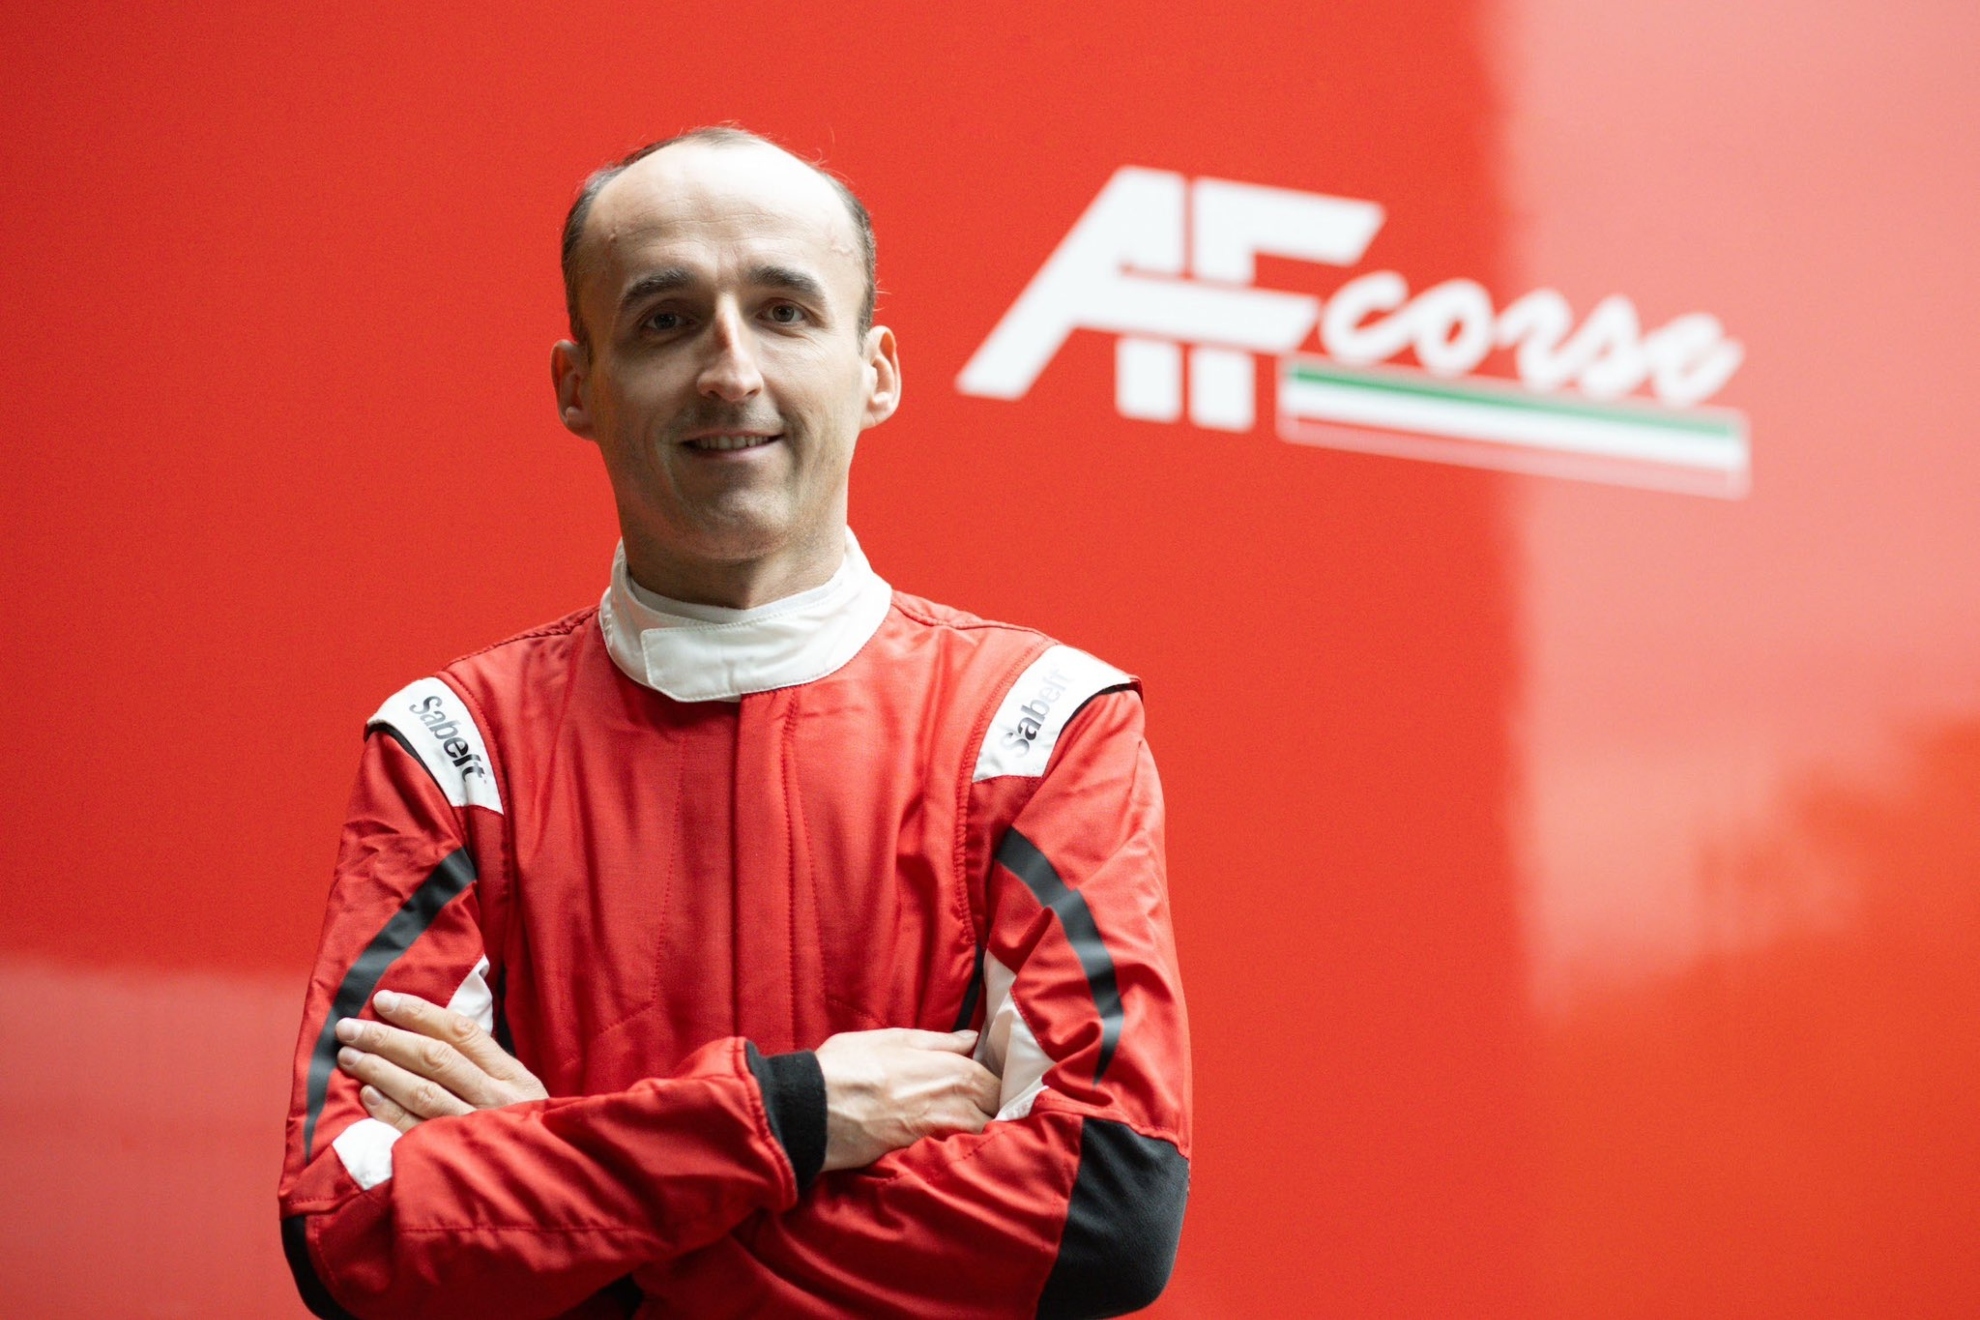 El destino de Robert Kubica será pilotar el primer Ferrari 499P suministrado por Maranello.